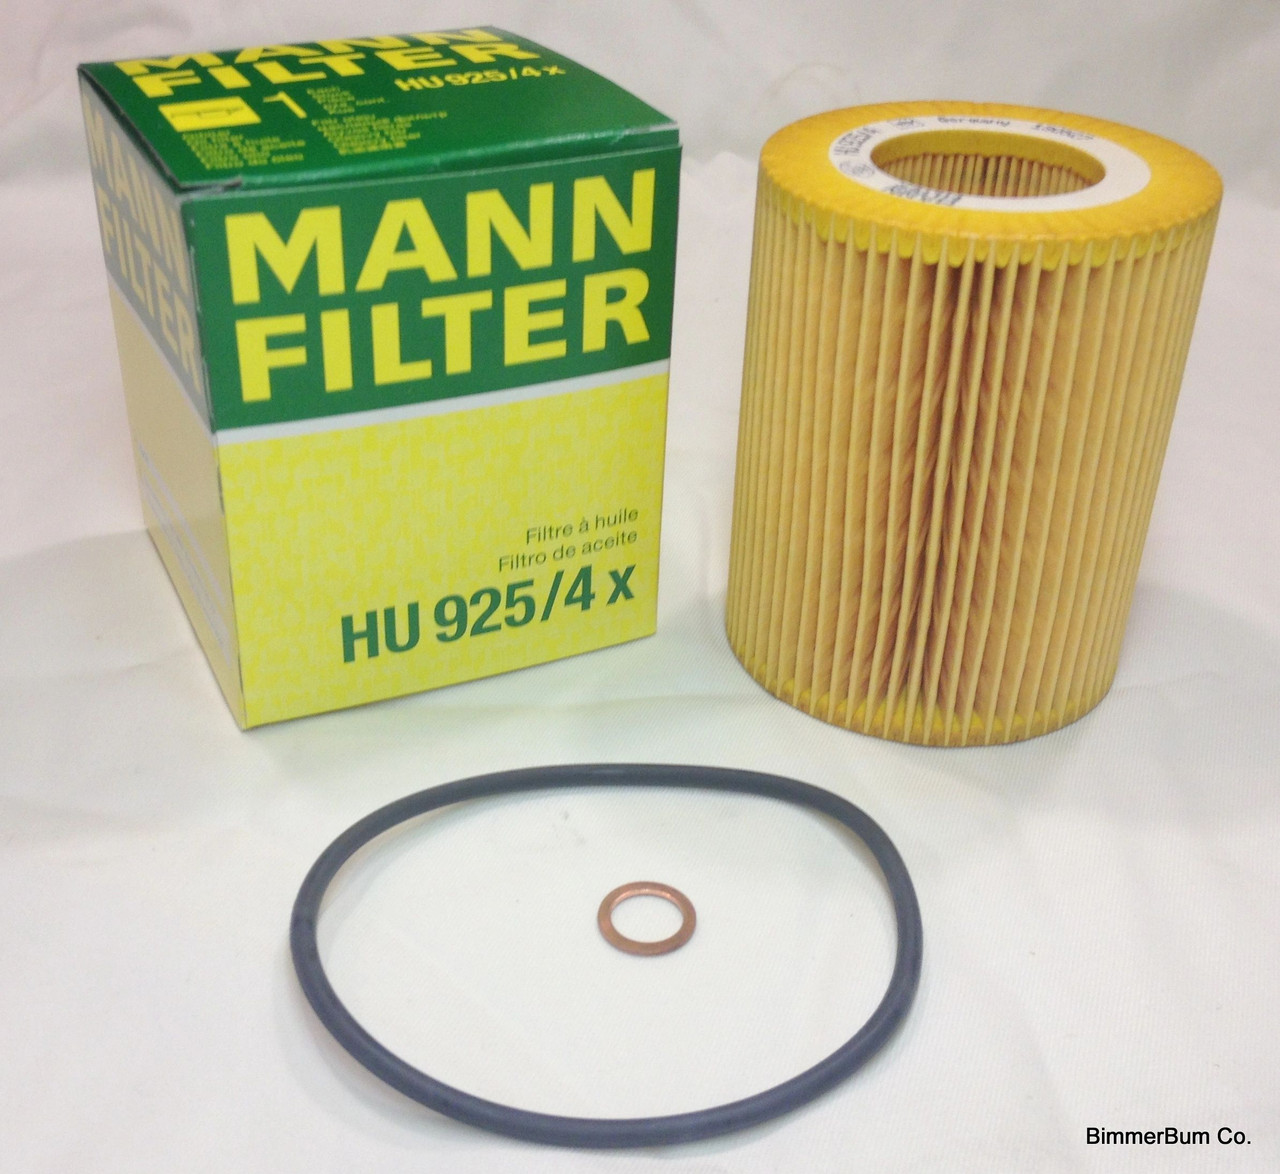 MANN-FILTER マンフィルター オイルフィルター BMW Z3 CN30 M54B (純正品番:11 42 7 512 300) HU925/4X